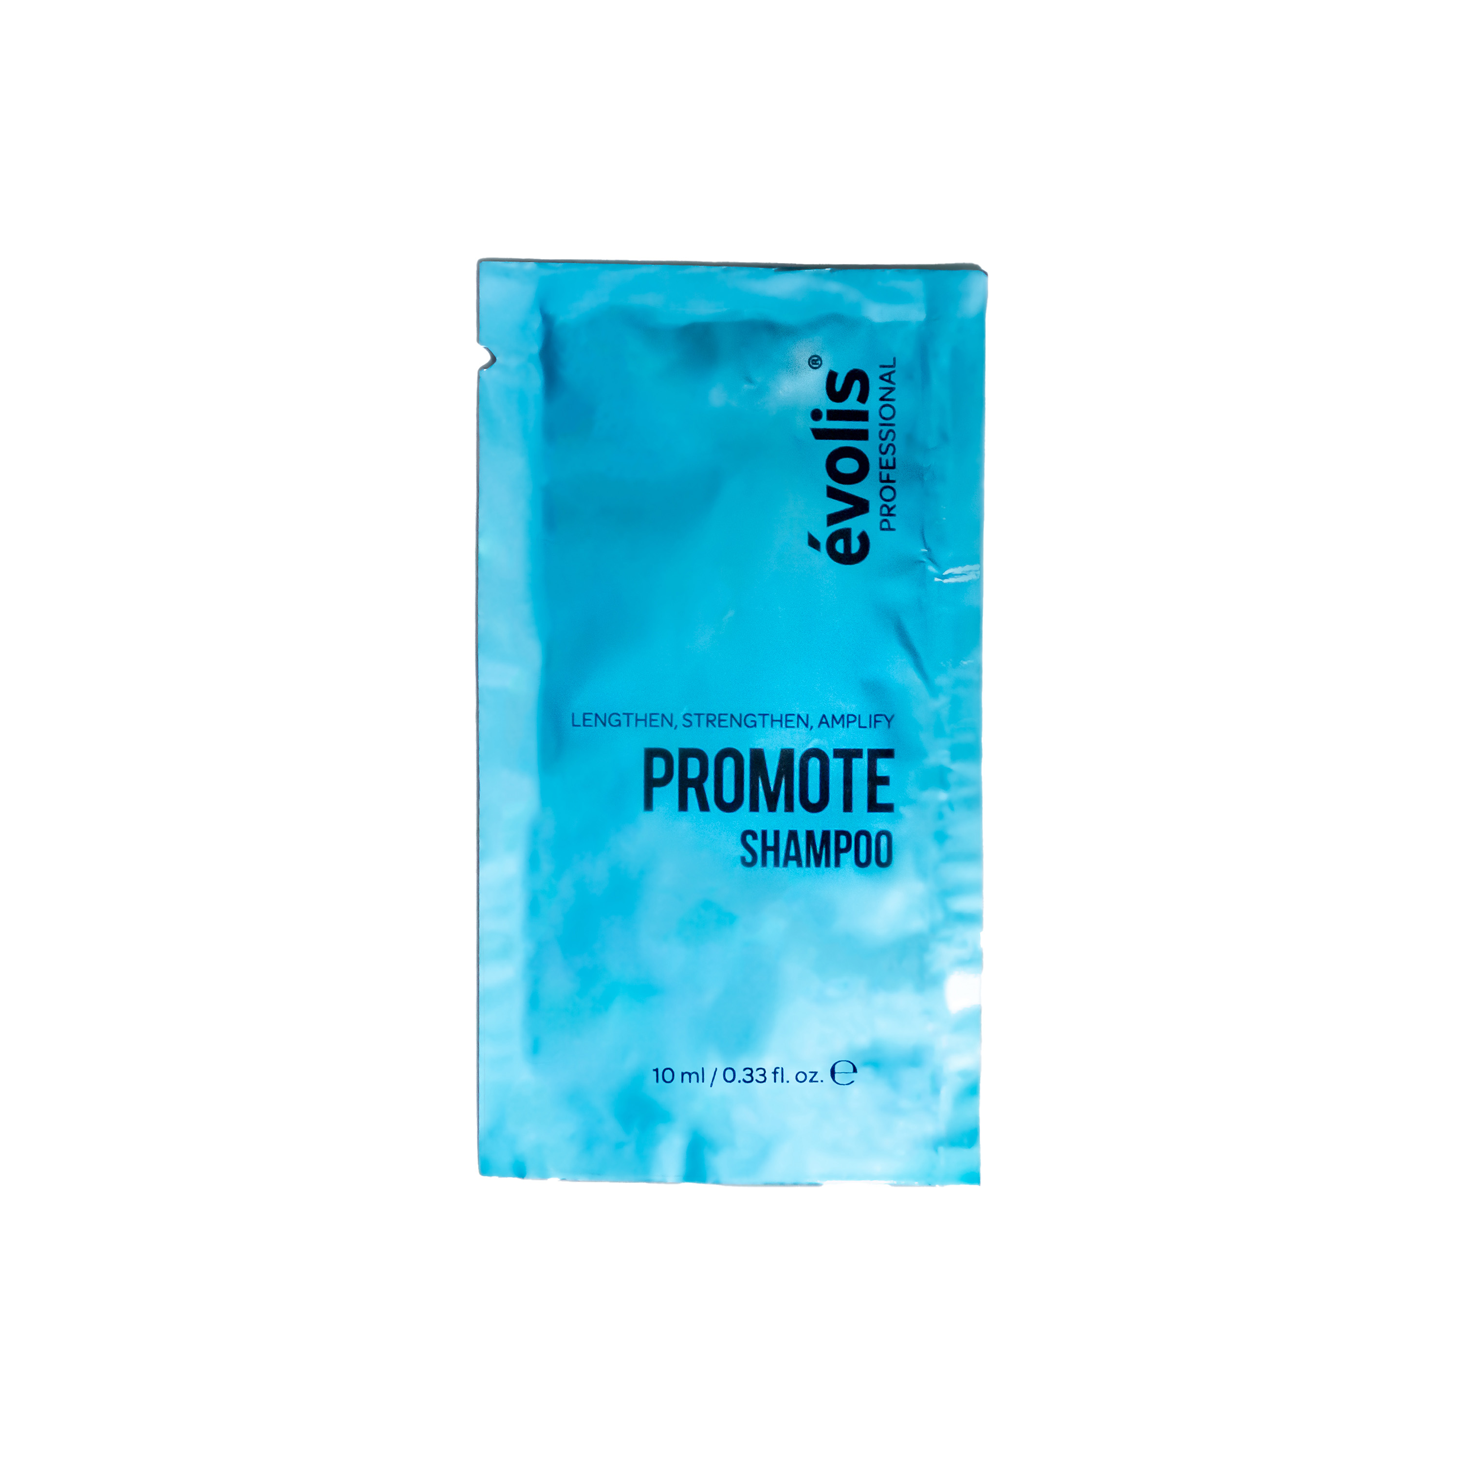 PROSHP10Promote-Shampoo-Sachet-10mL730x730_2xpx.png